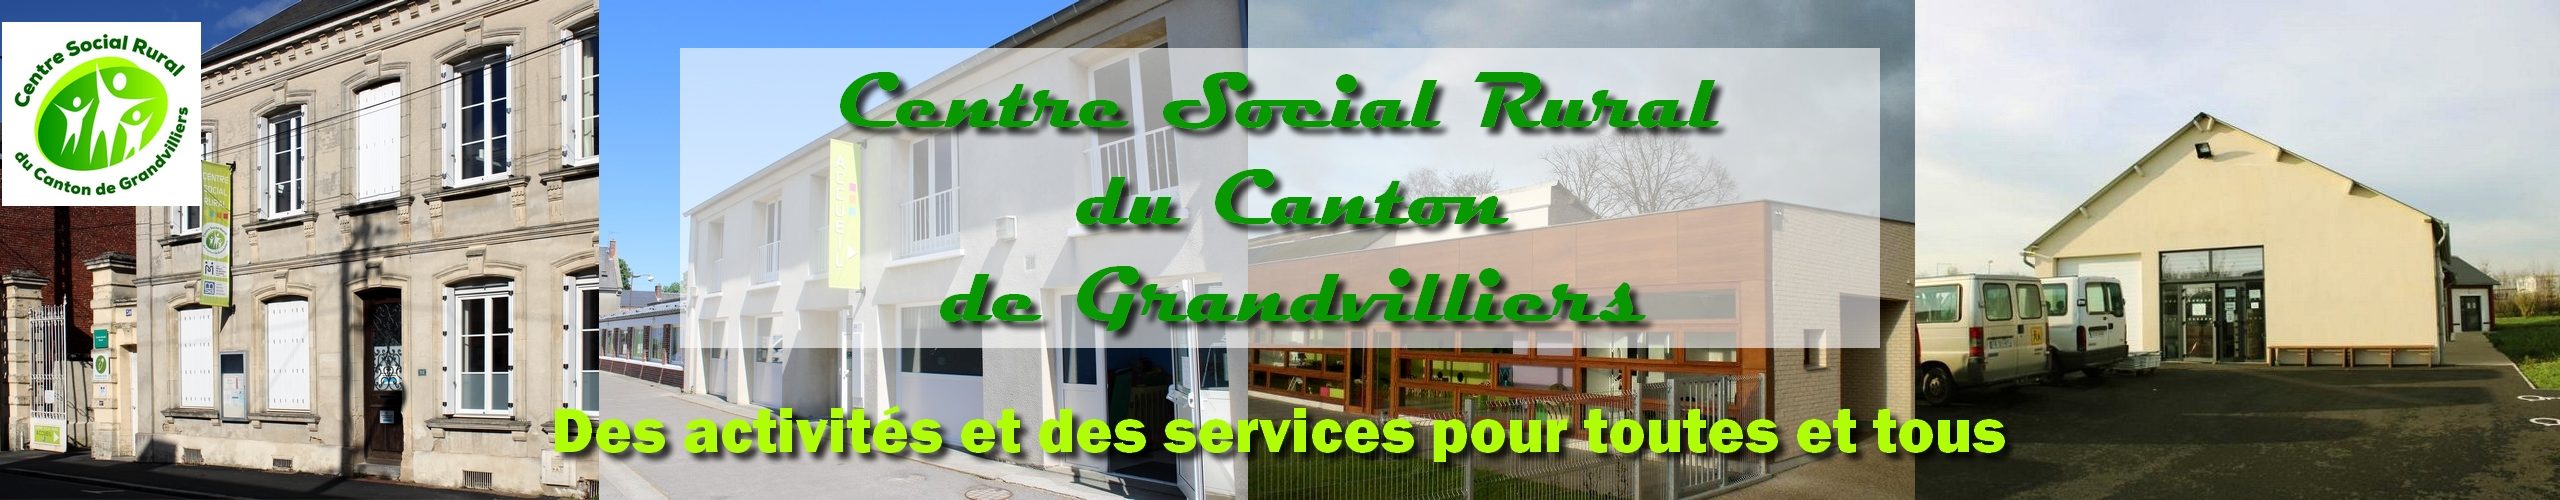 Centre social rural du canton de Grandvilliers